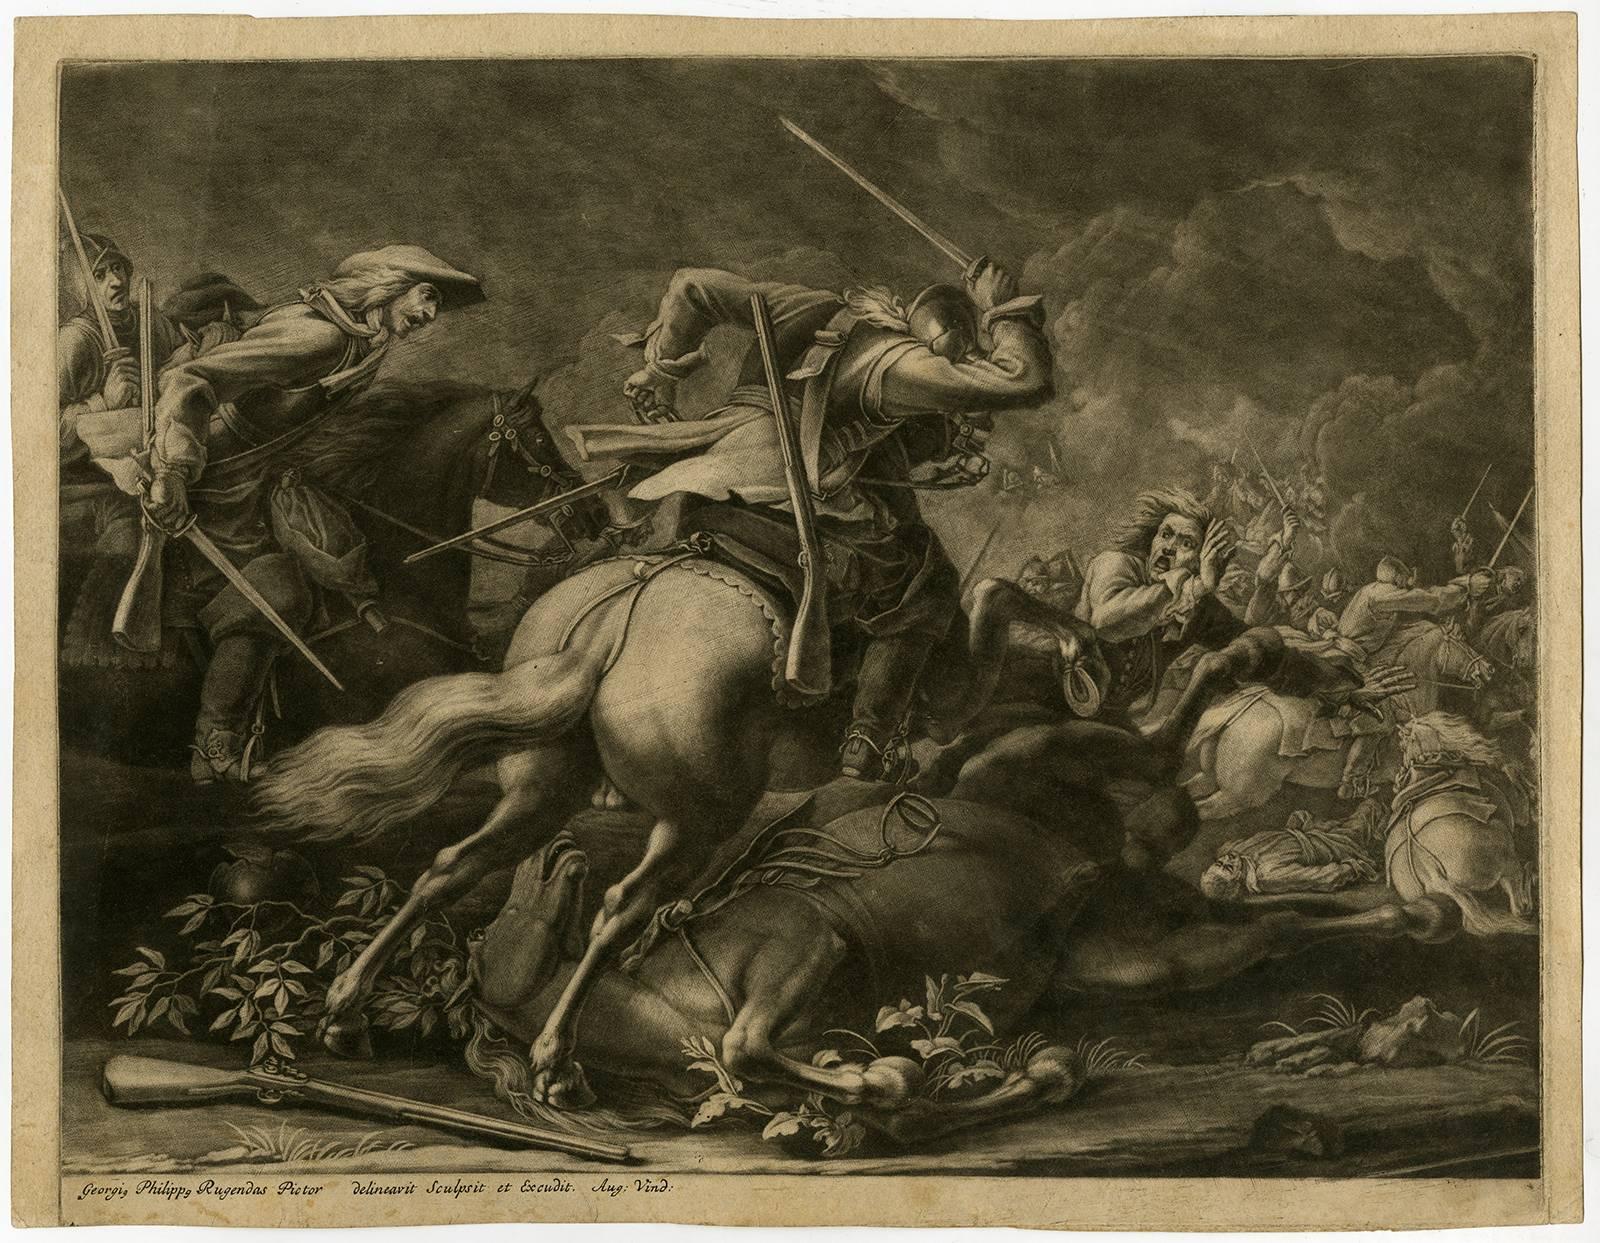 Georg Philipp Rugendas the Elder Figurative Print - Untitled - Battle scene with cavalry in combat.